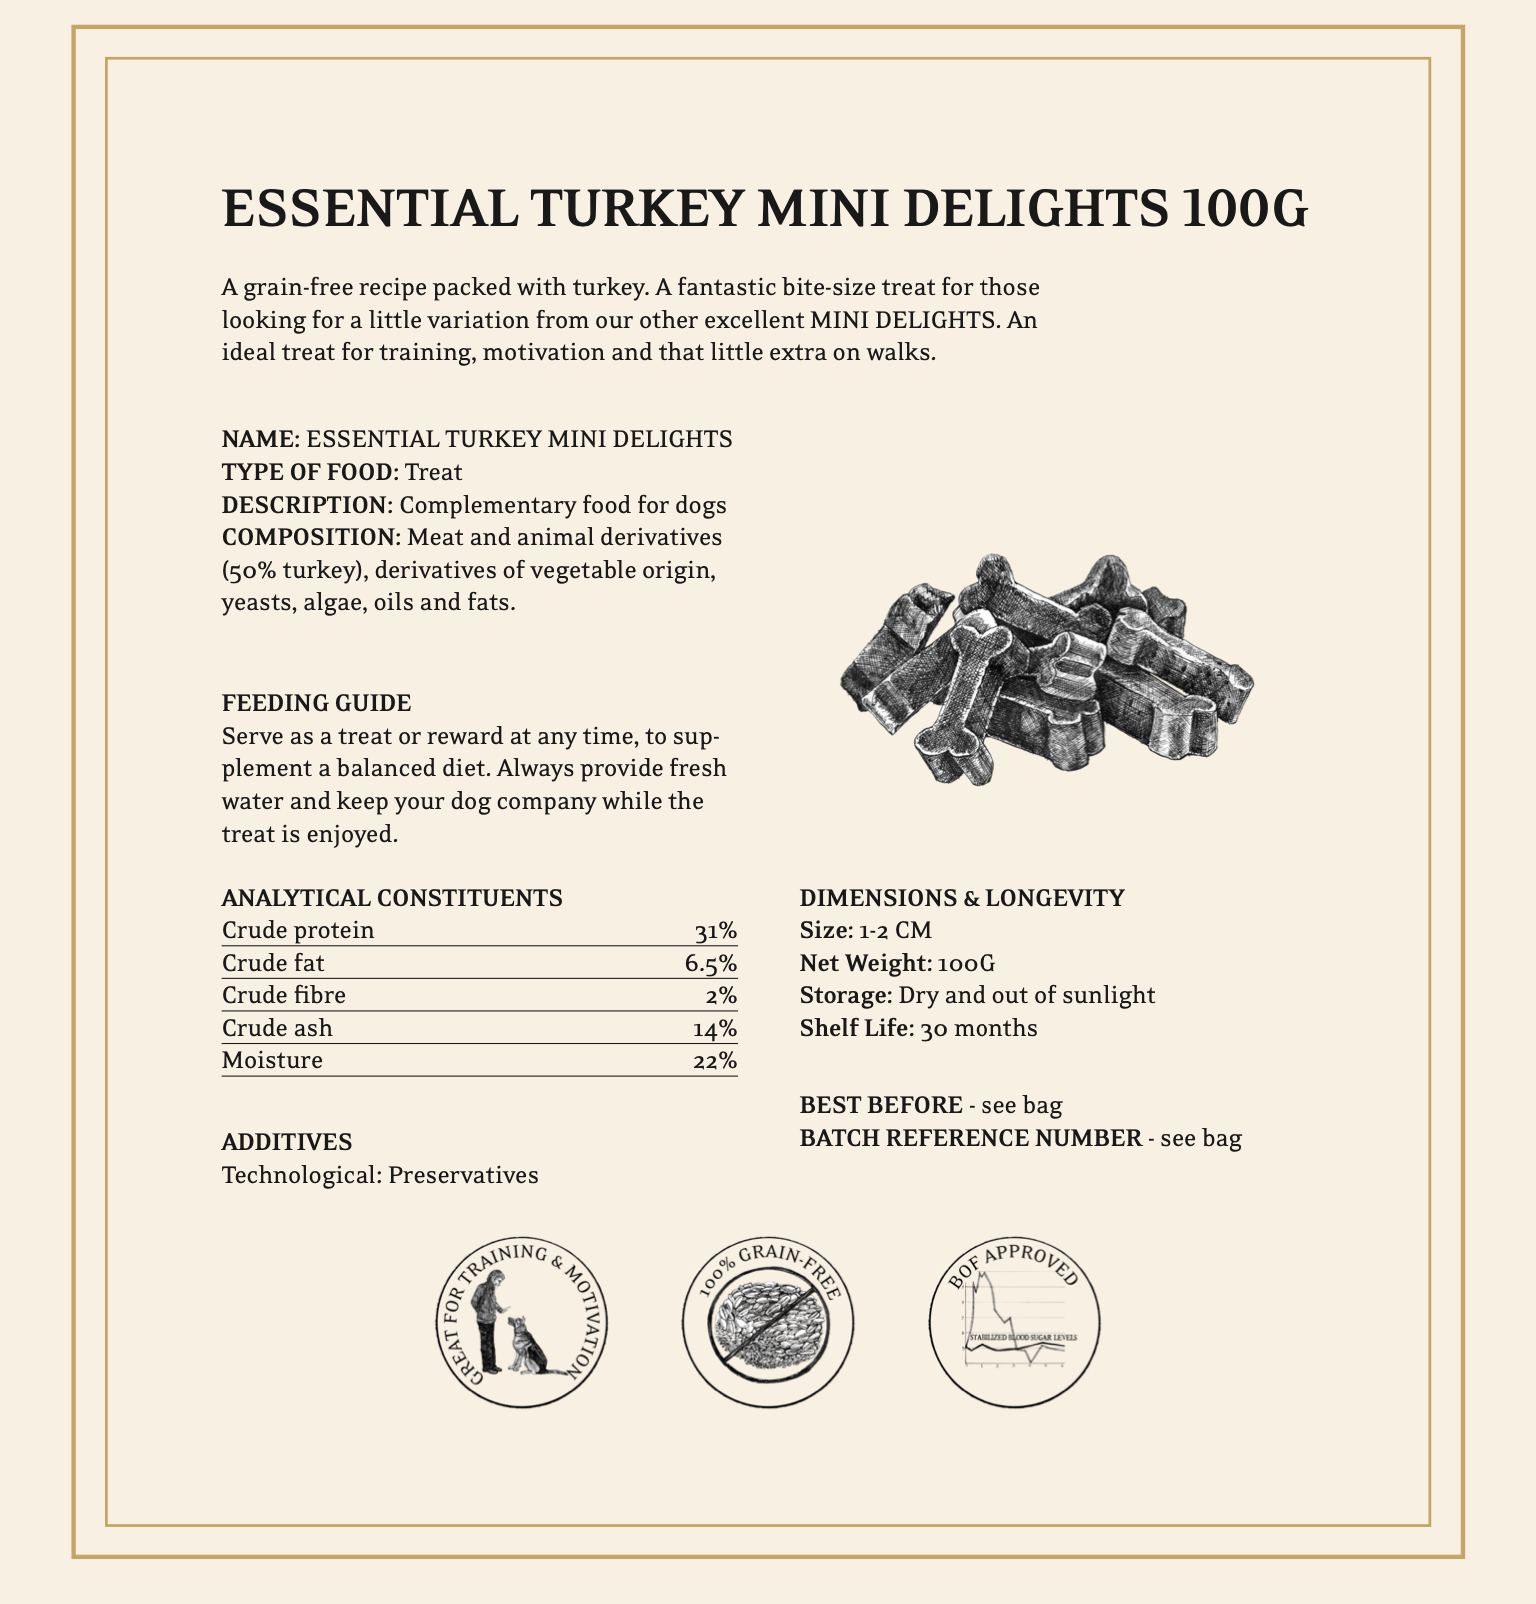 ESSENTIALS TURKEY MINI DELIGHTS 100g